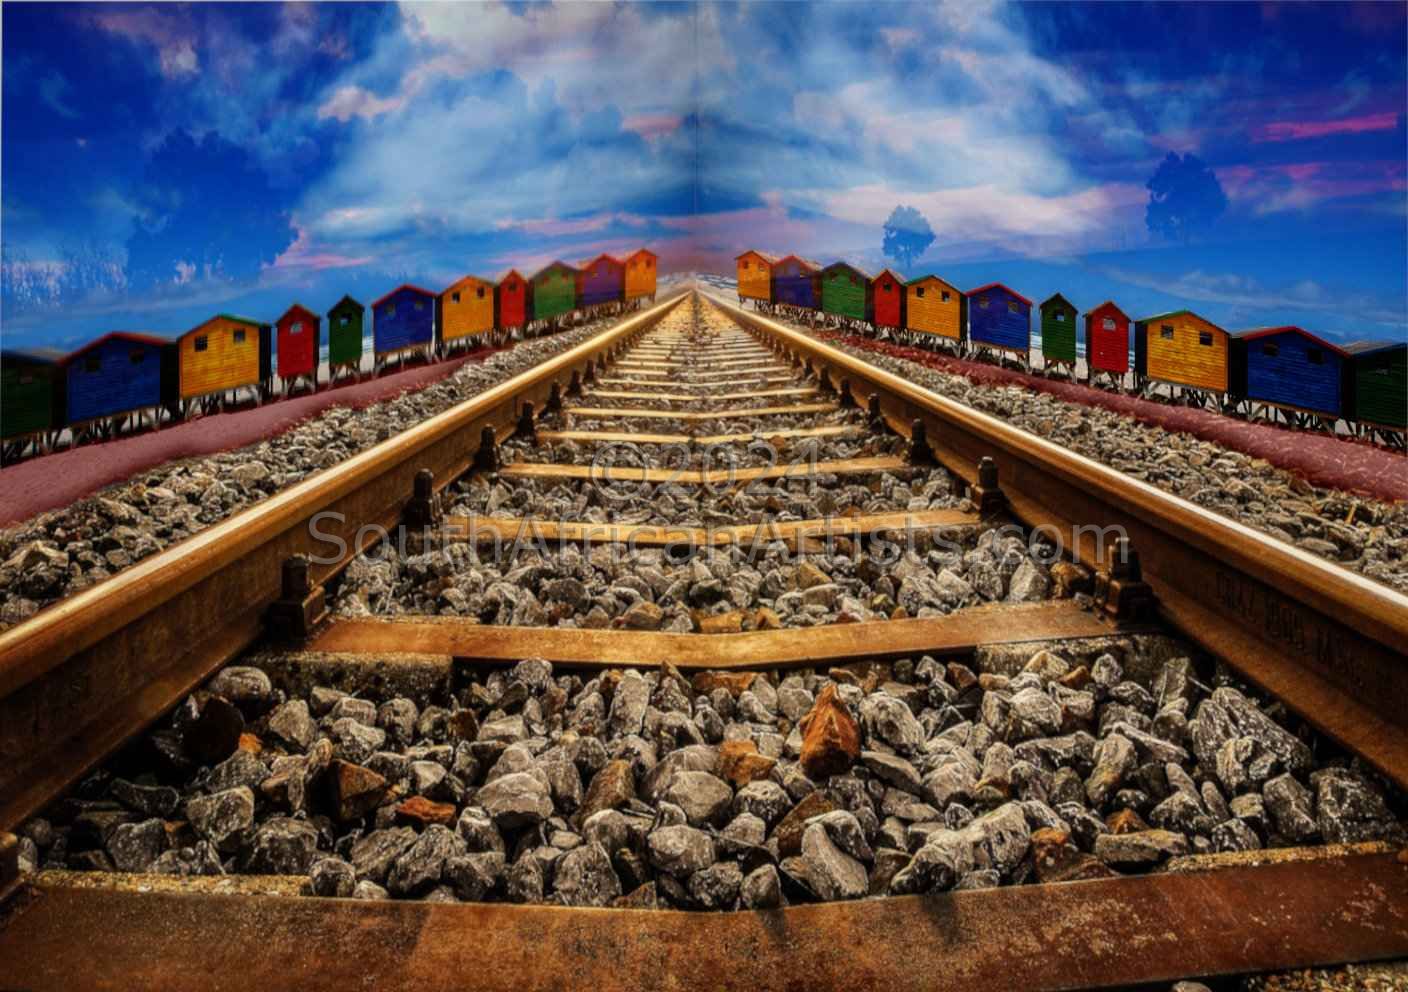 Railway To Nowhere